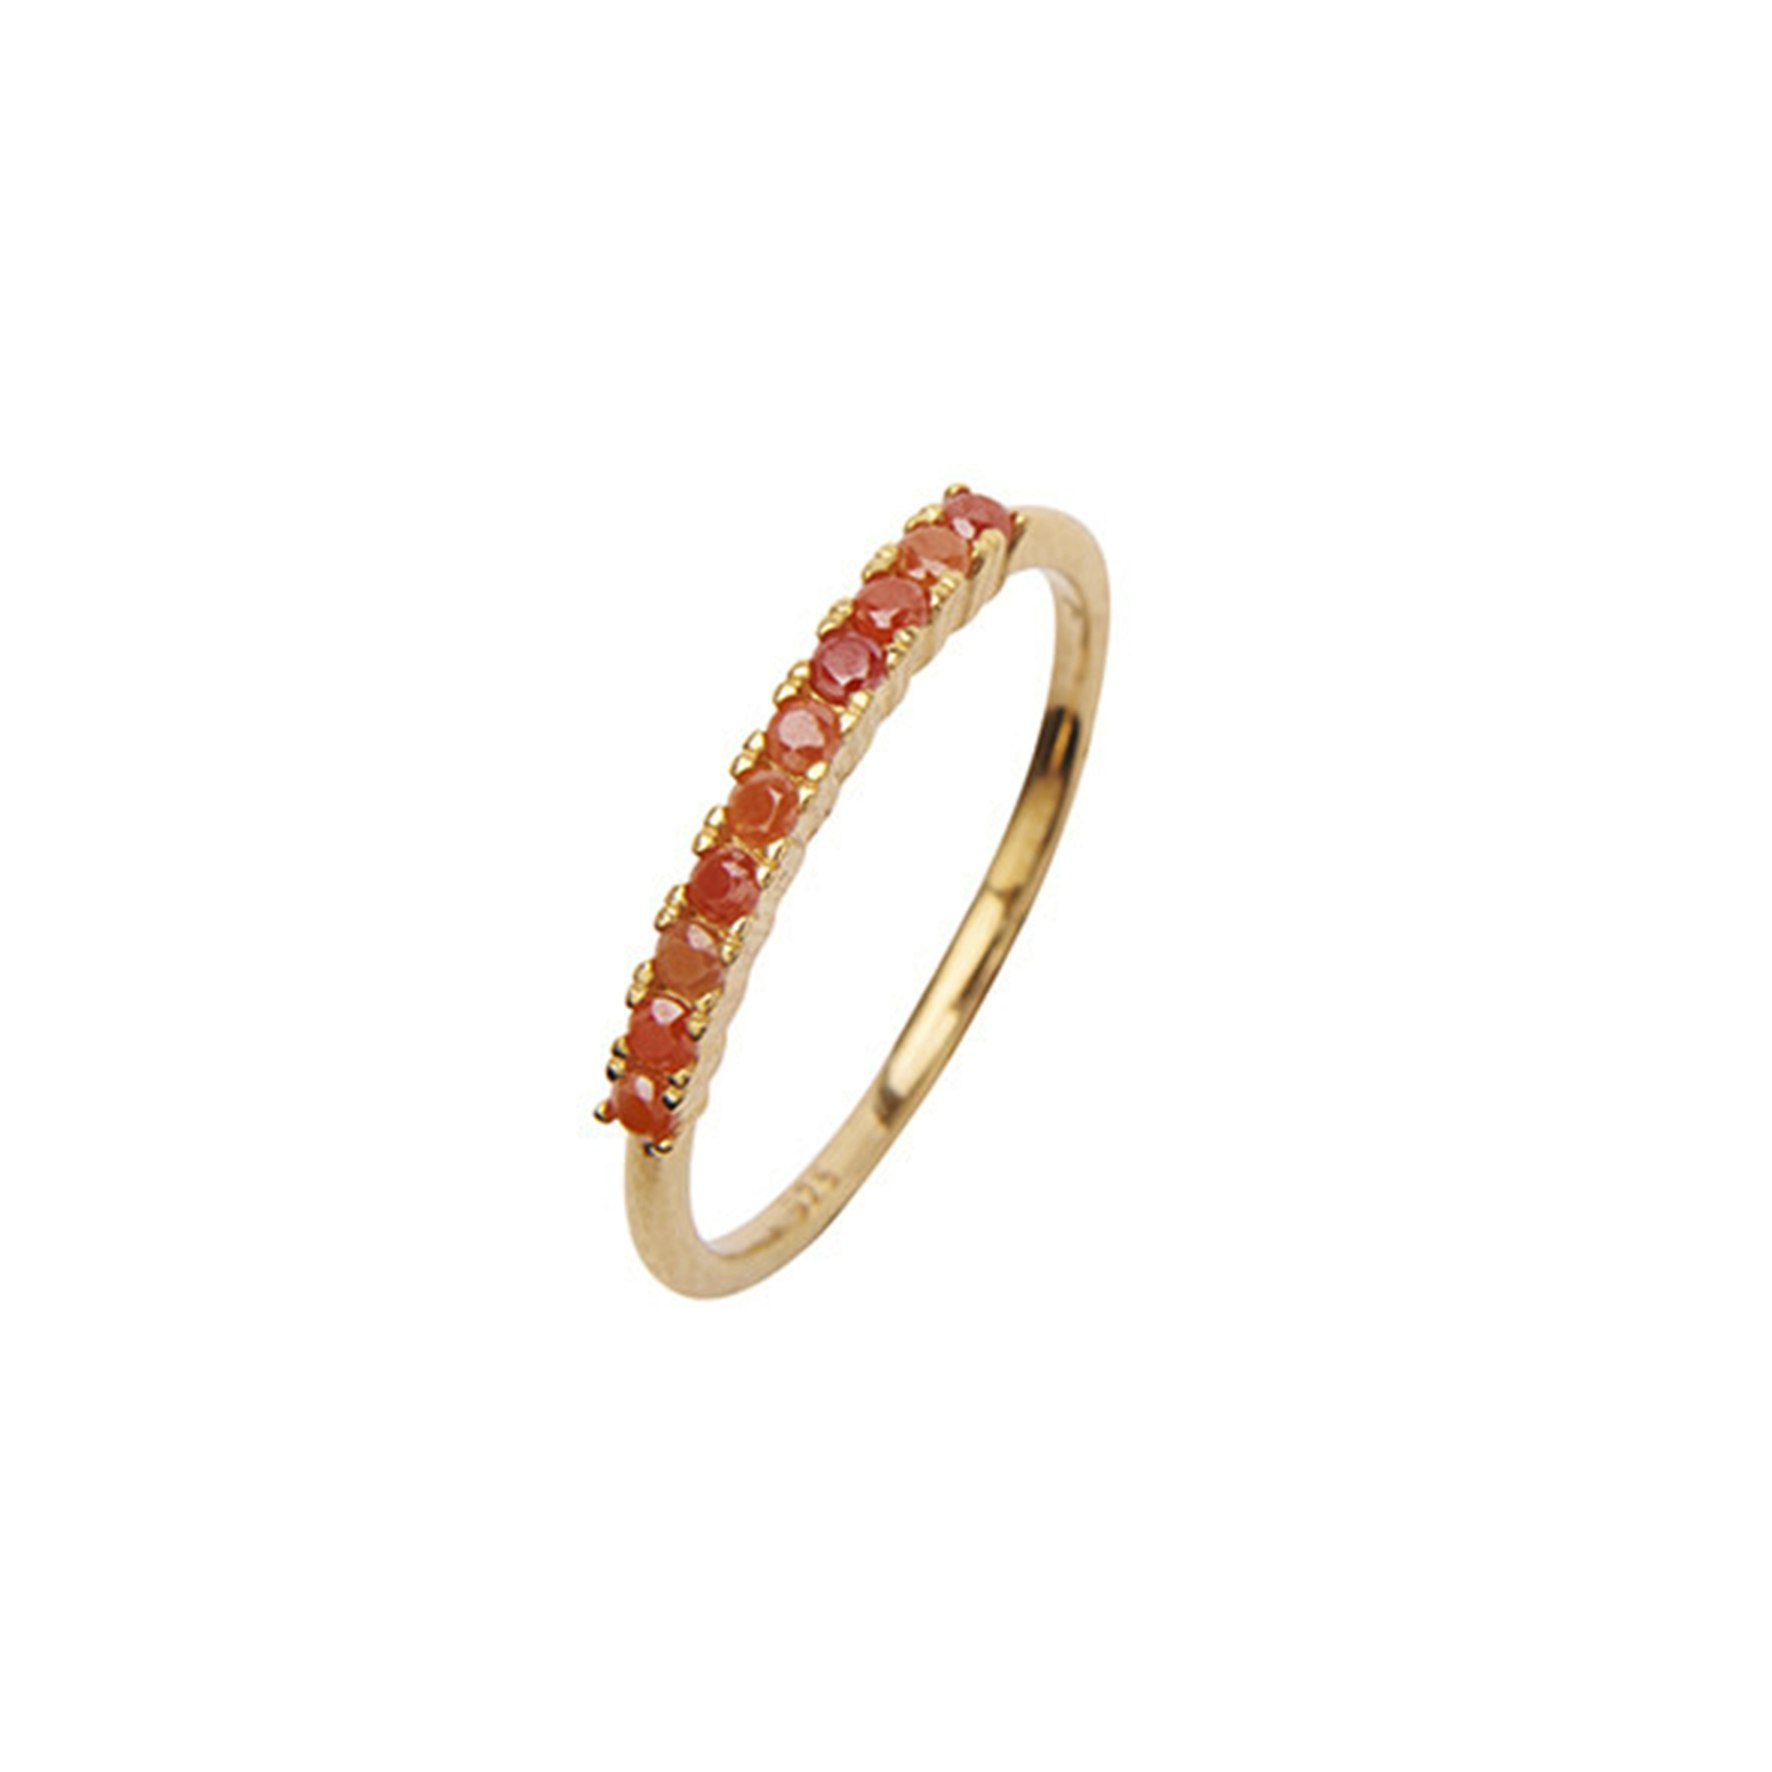 Fineley Crystal Ring Coral fra Pico i Forgylt-Sølv Sterling 925